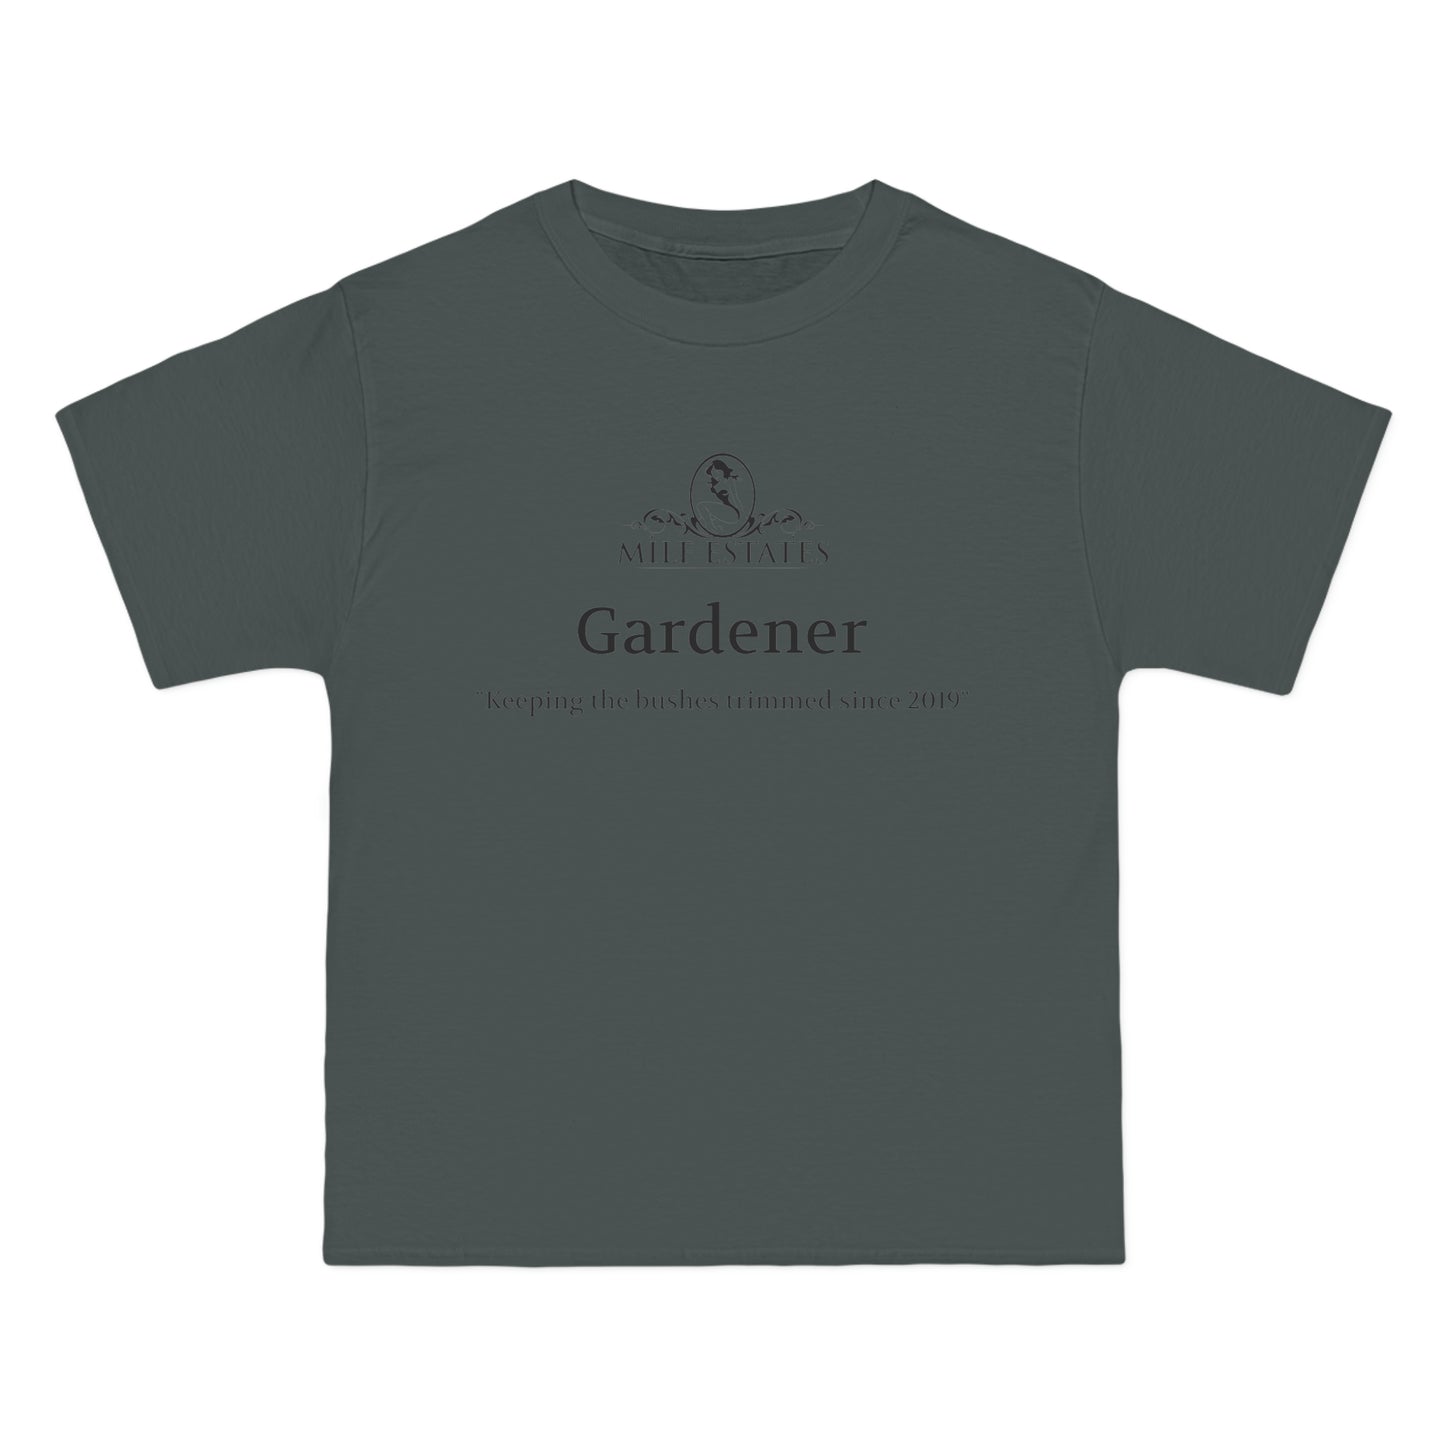 MILF ESTATES Gardener (logo)